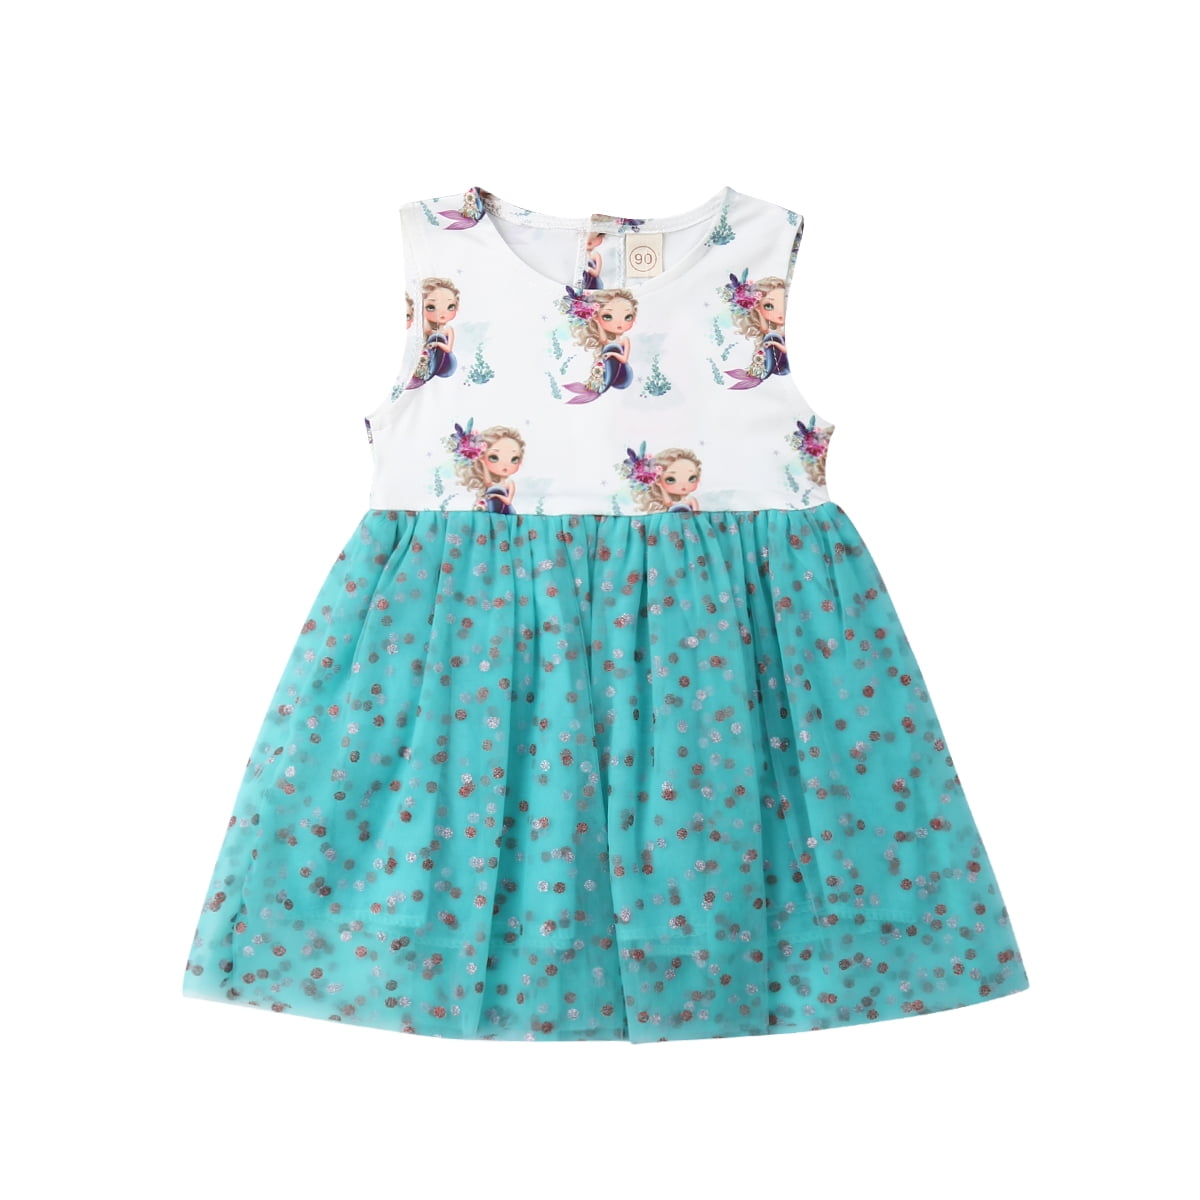 discount 97% Multicolored Desigual casual dress KIDS FASHION Dresses Print 